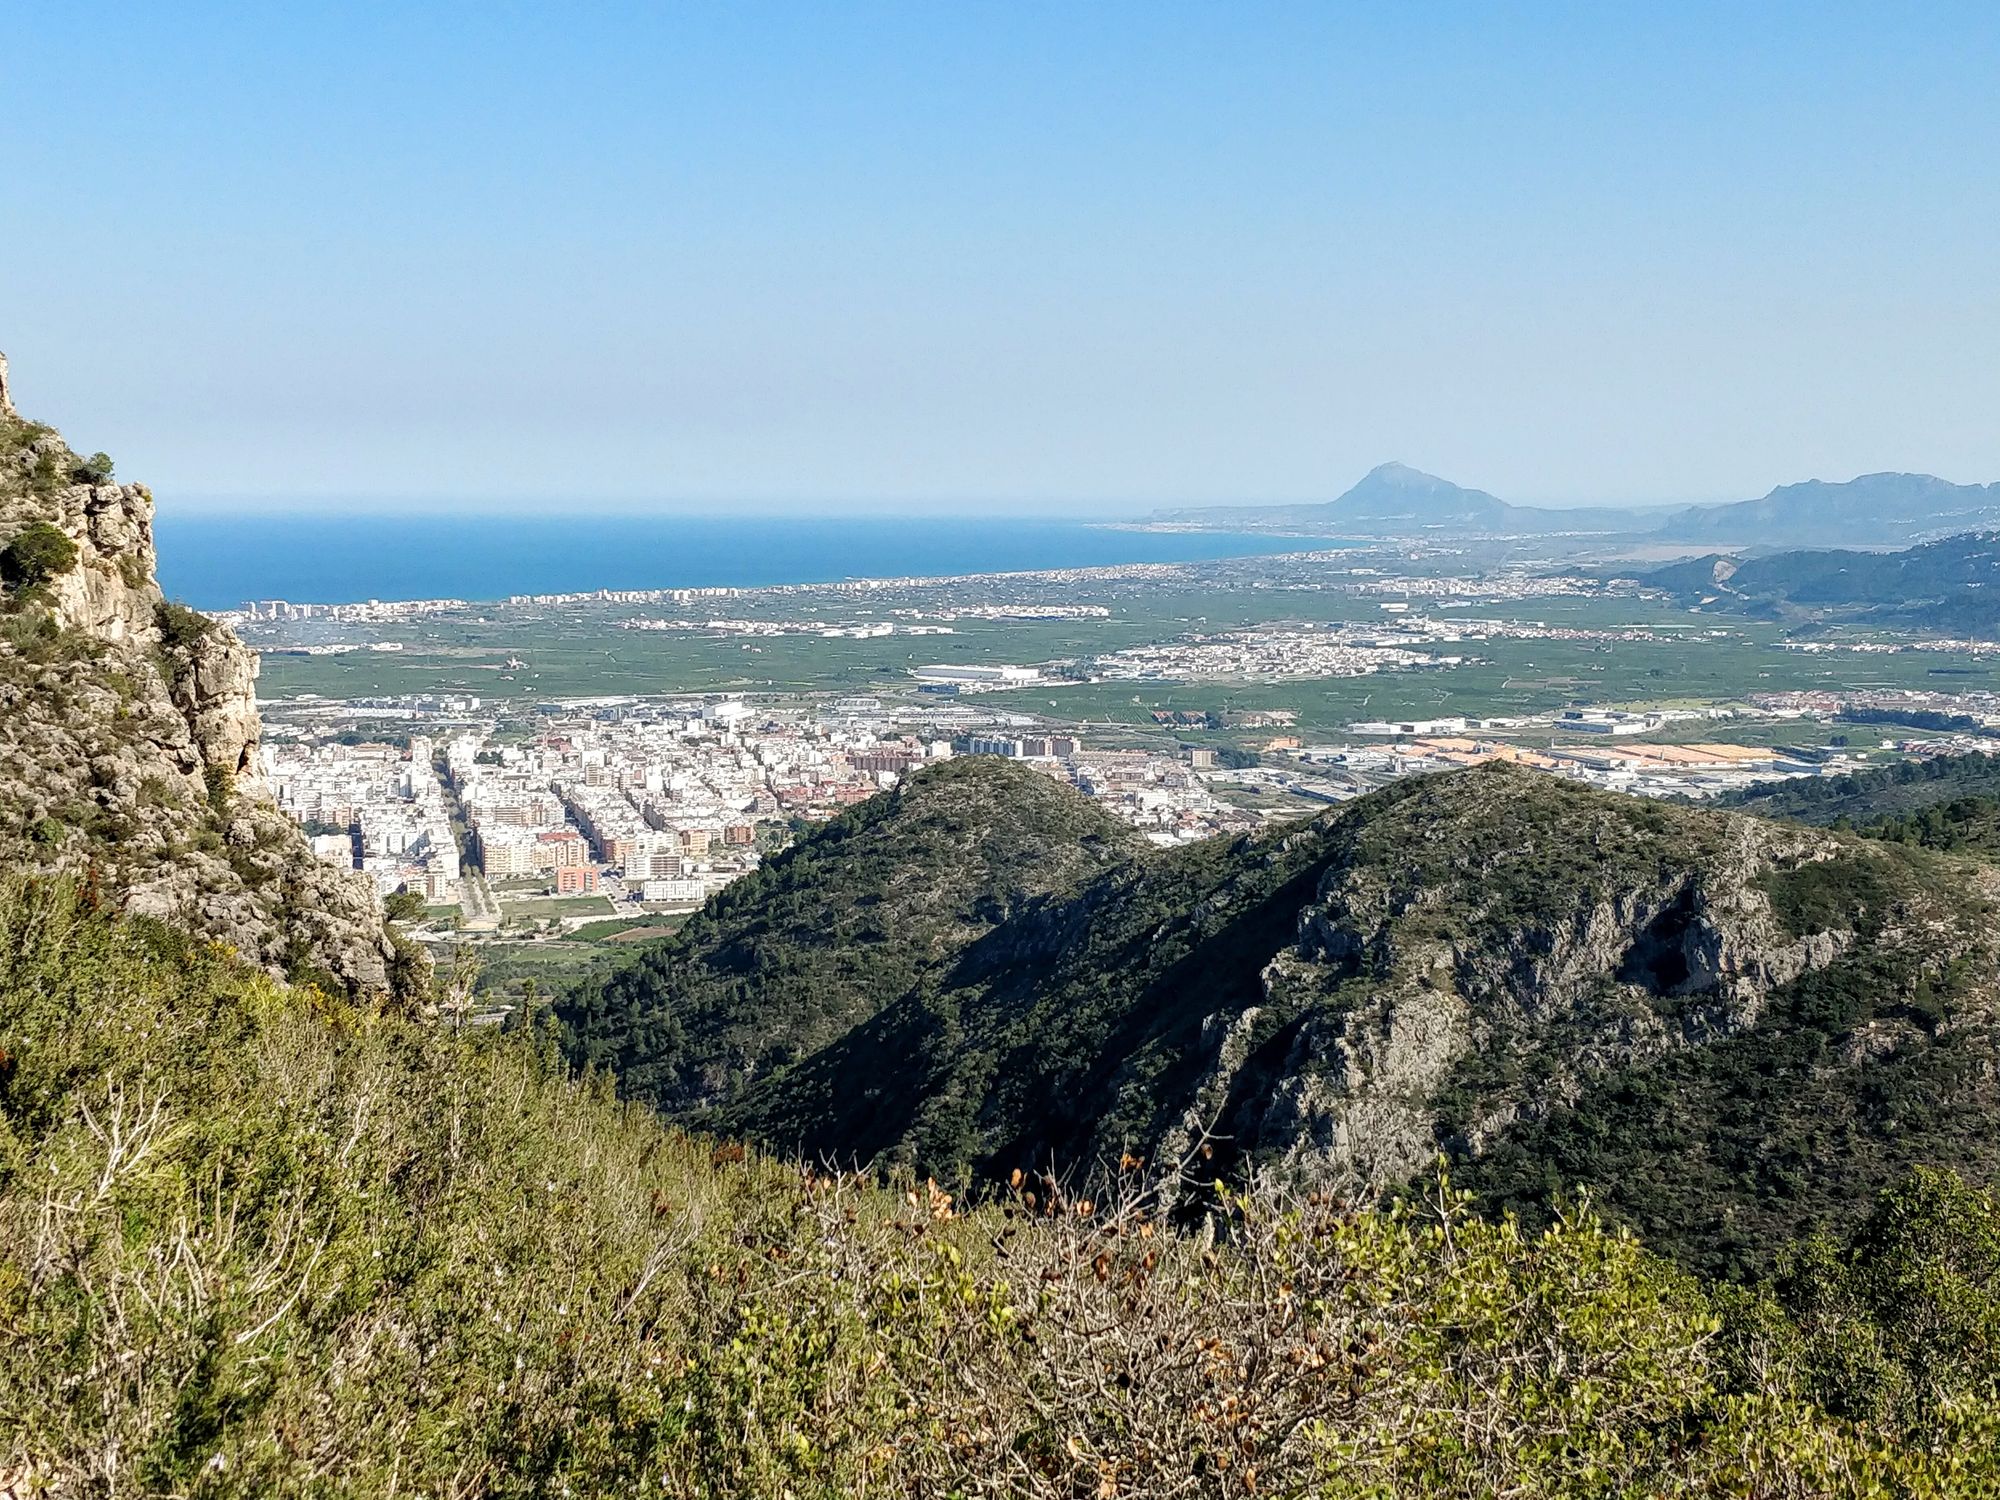 Gandia and Mollo de la Creu - Our First Contact With the Mediterranean Landscape (Mar 2021)